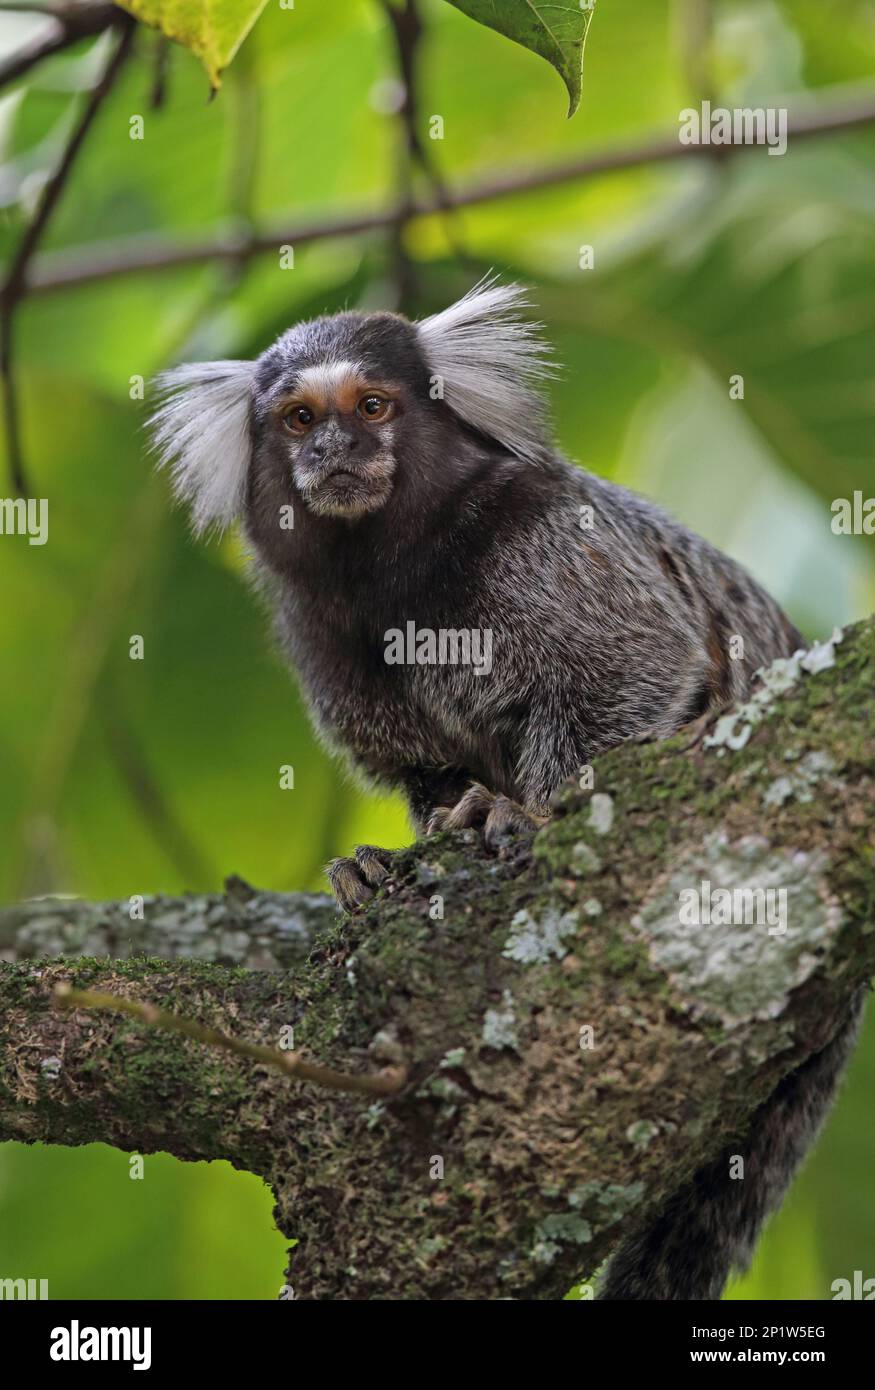 Common Marmoset (Callithrix jacchus) adult, sitting on branch, Atlantic Rainforest, Reserva Ecologica de Guapi Assu, Rio de Janeiro State, Brazil Stock Photo